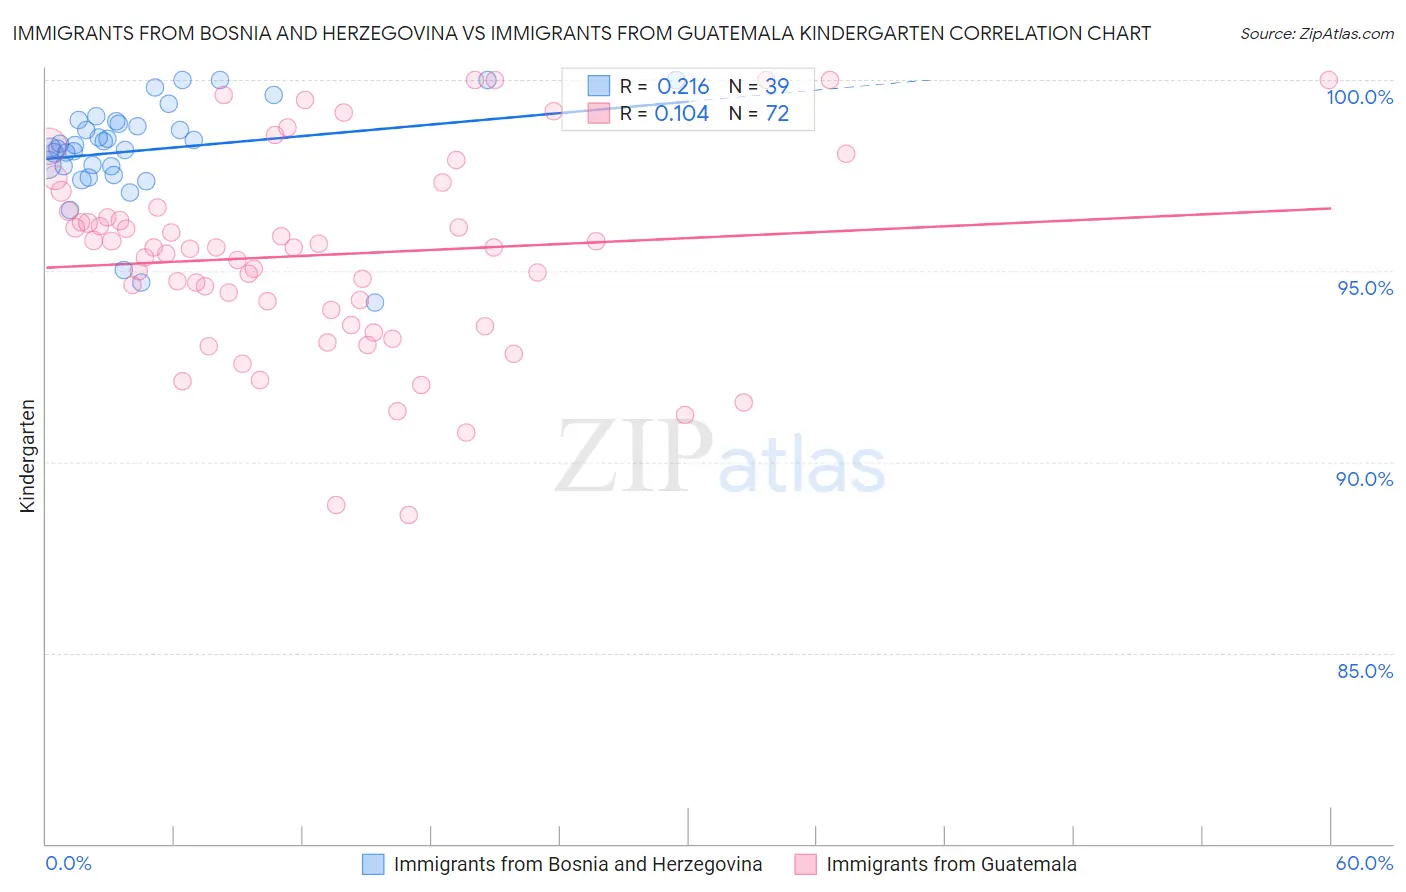 Immigrants from Bosnia and Herzegovina vs Immigrants from Guatemala Kindergarten